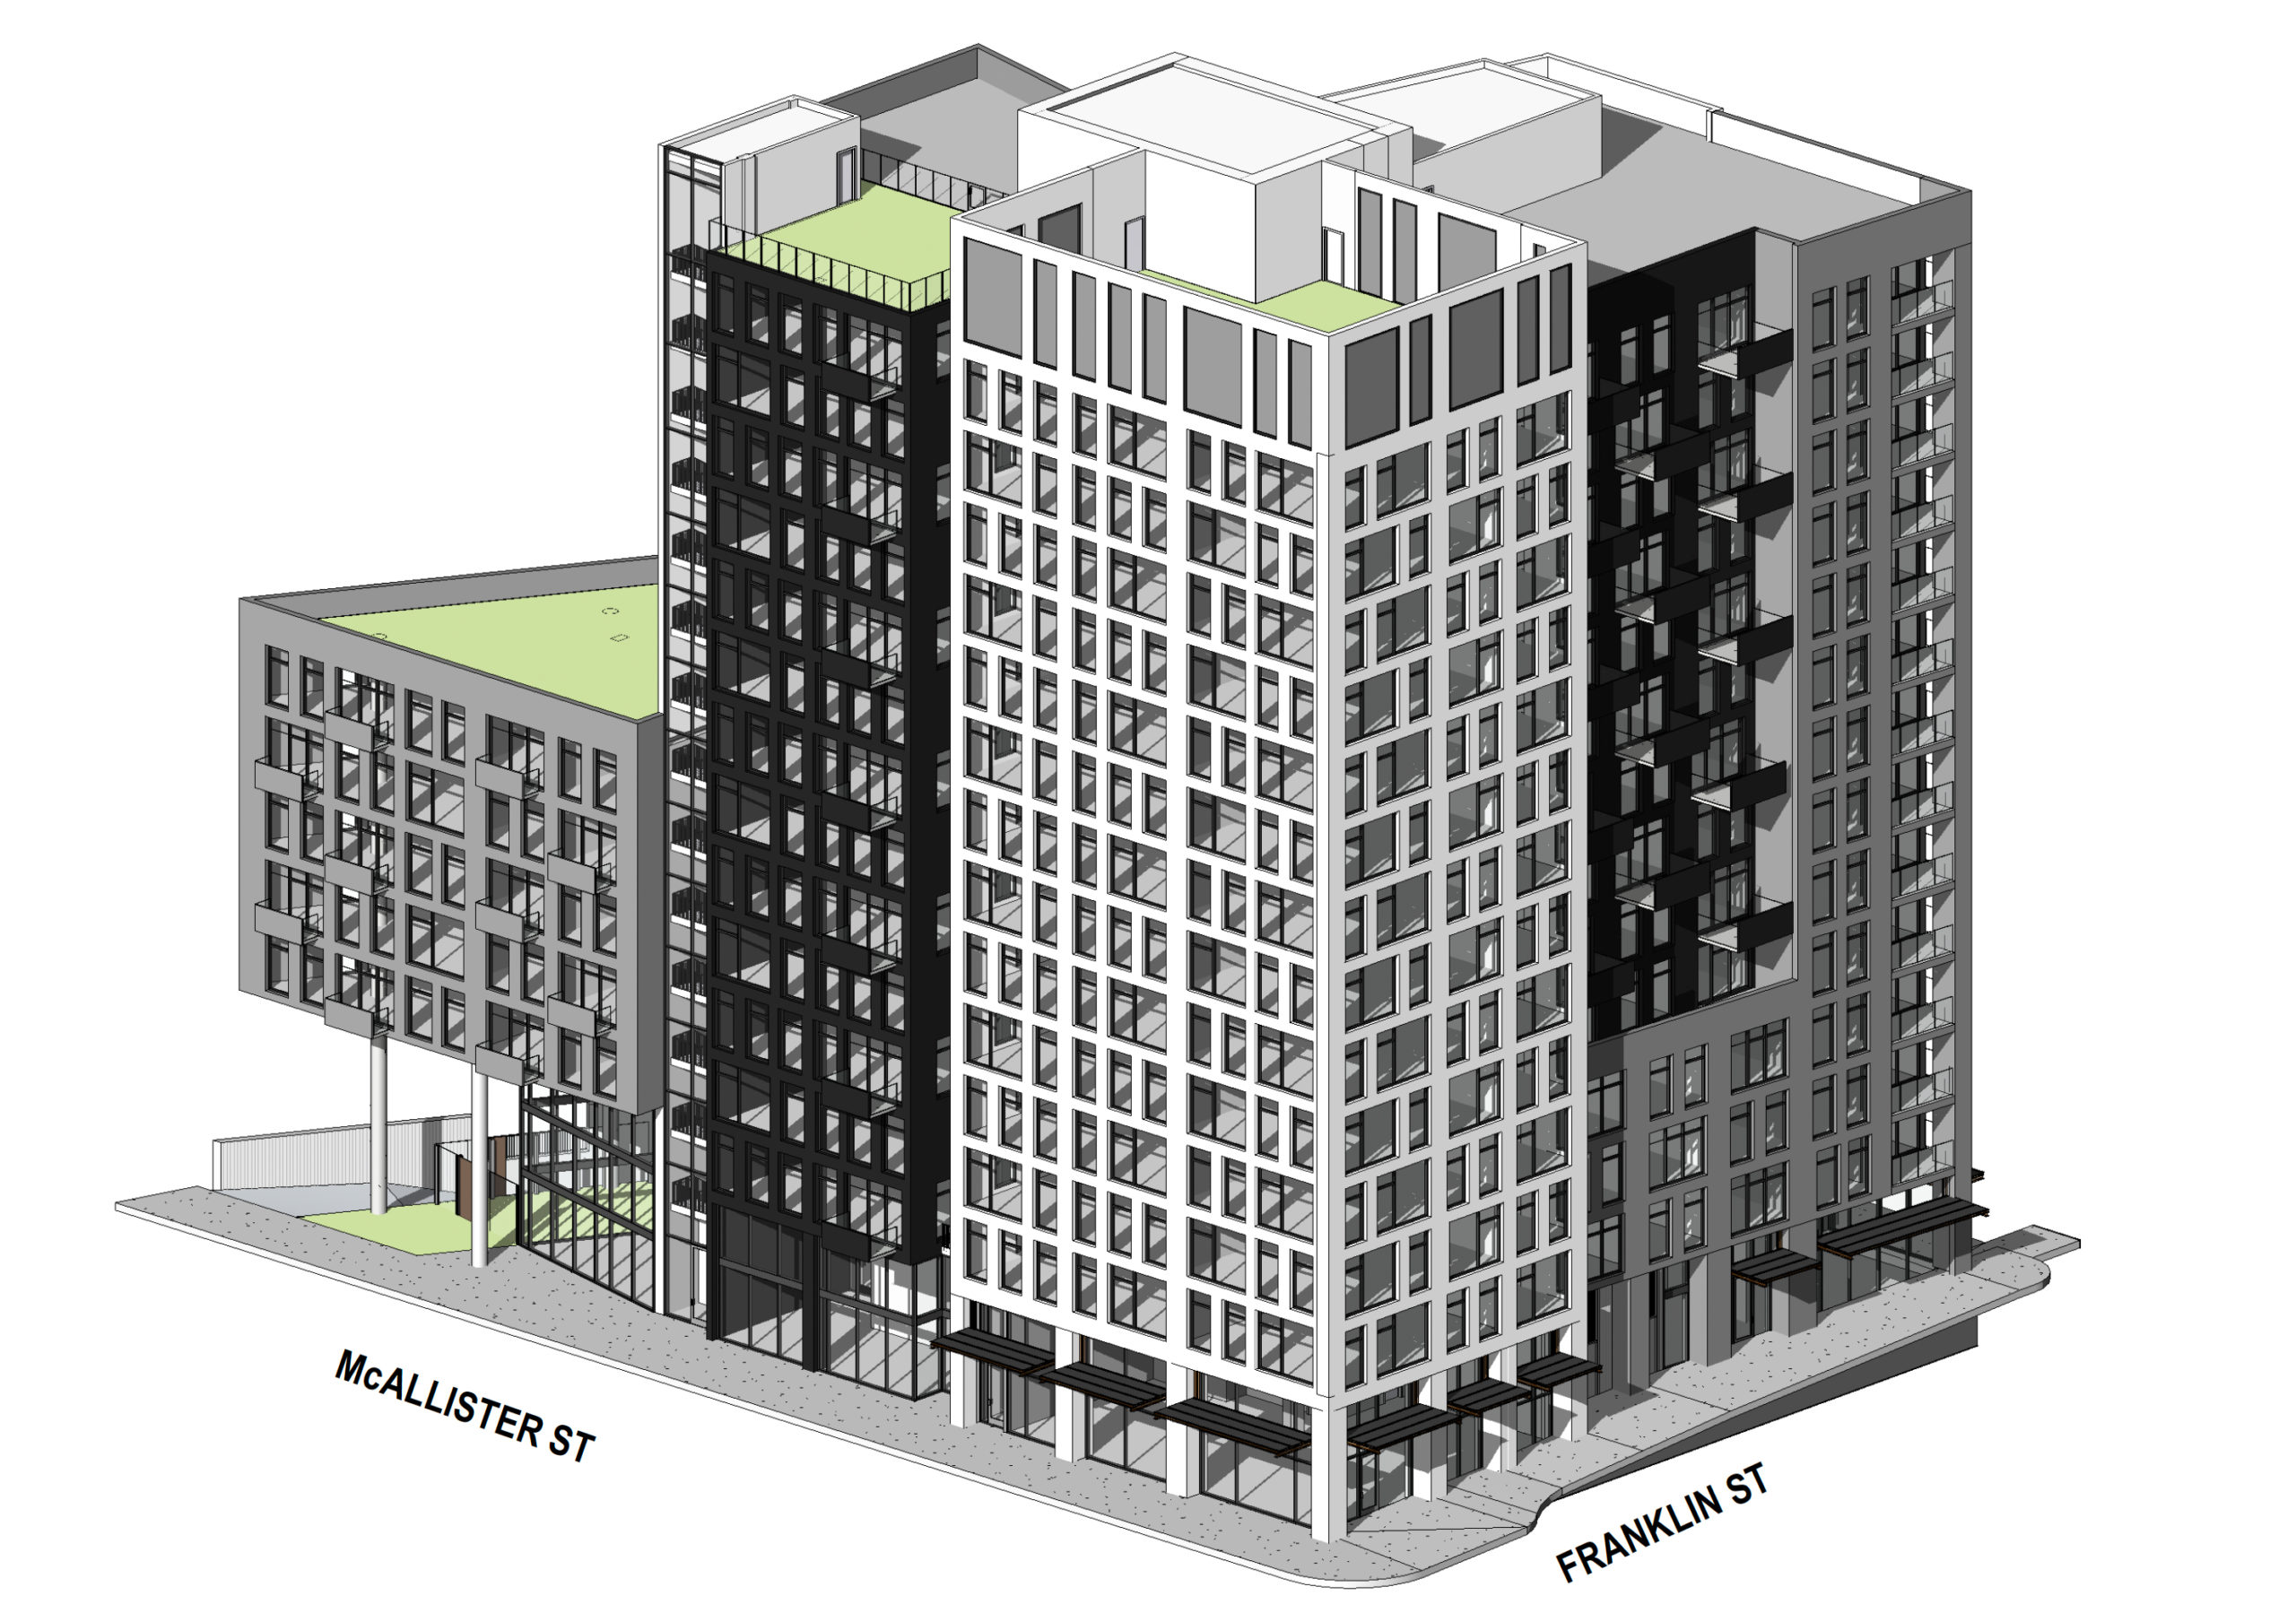 600 McAllister Street axon view, illustration by David Baker Architects